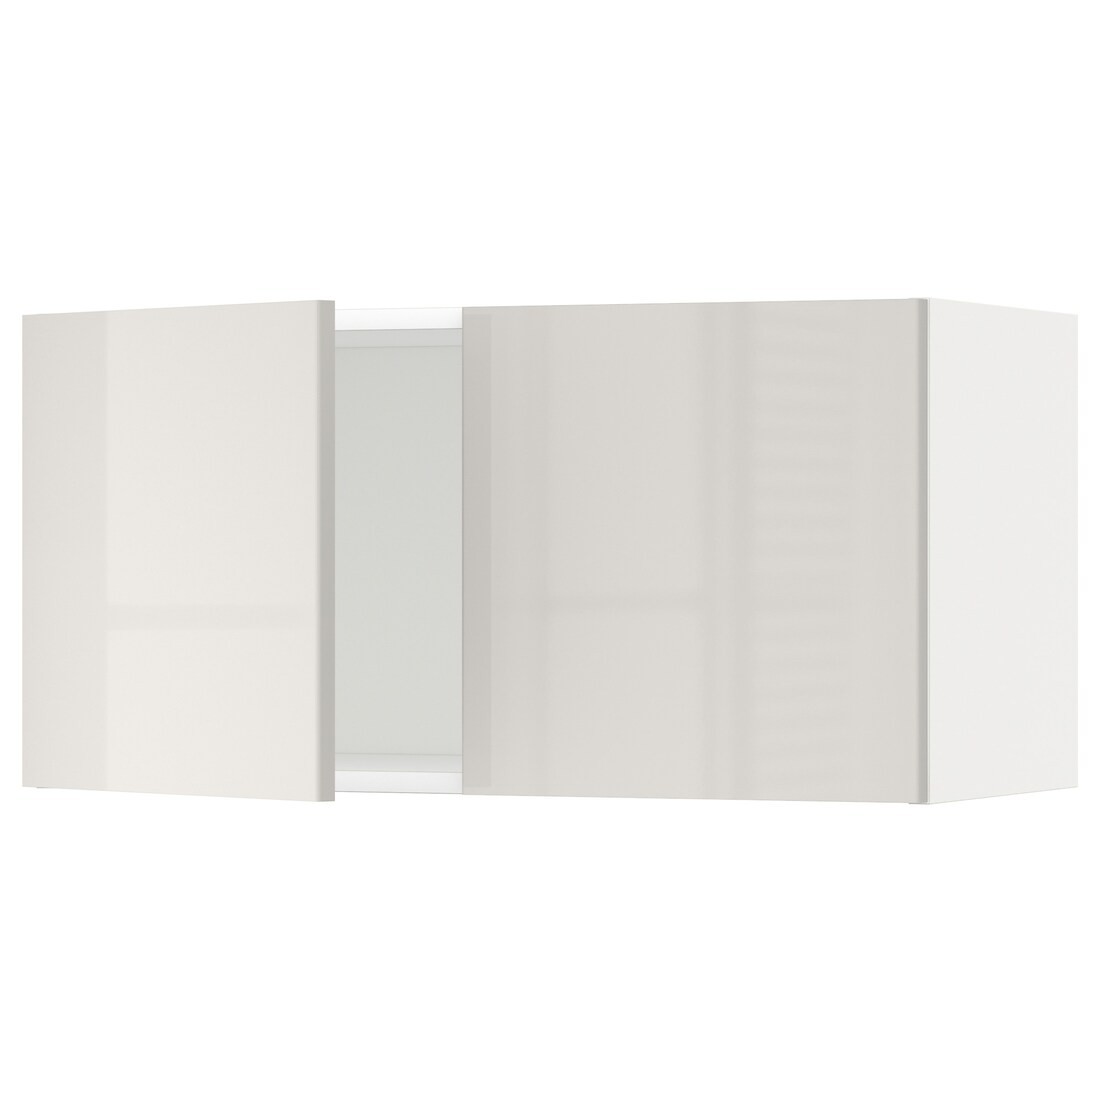 IKEA METOD МЕТОД Навесной шкаф с 2 дверями, белый / Ringhult светло-серый, 80x40 см 09465207 | 094.652.07